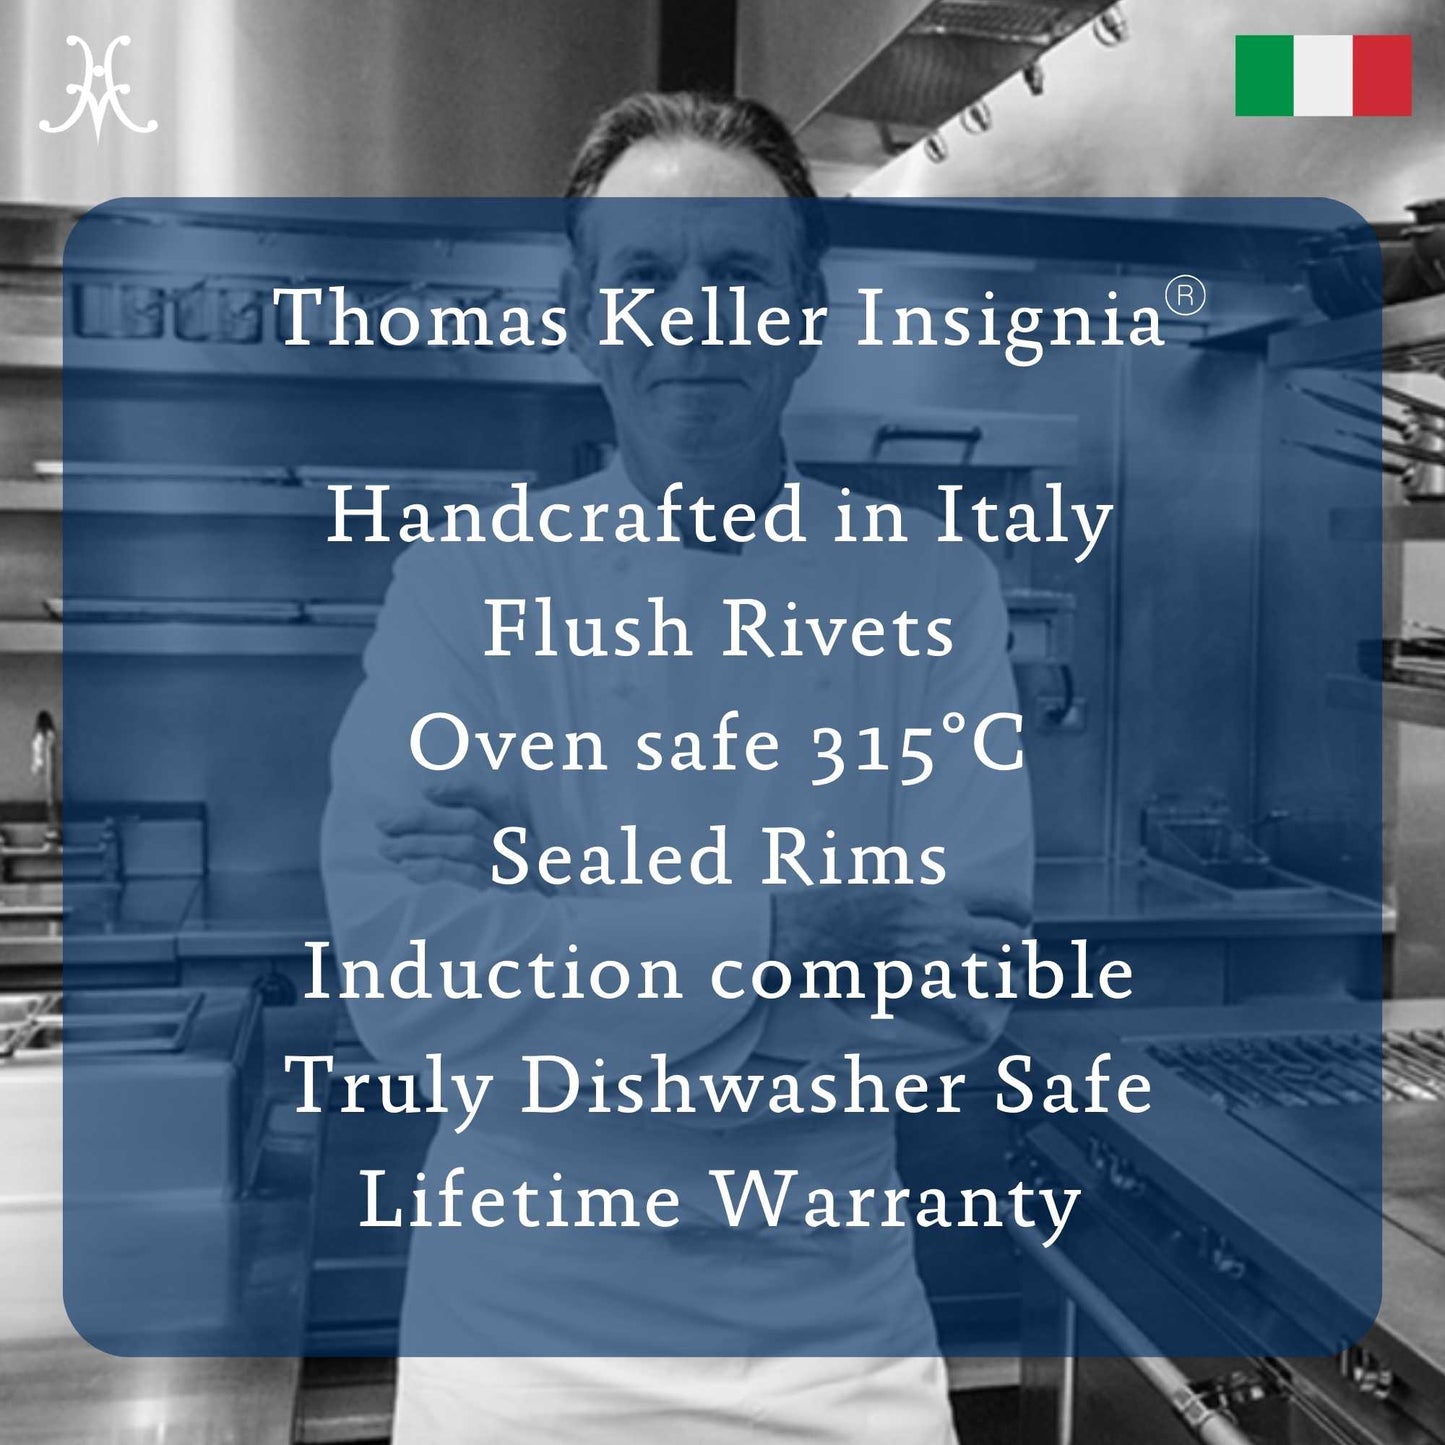 Hestan Thomas Keller Insignia Commerical Clad Stainless Steel Open Skillet 22cm